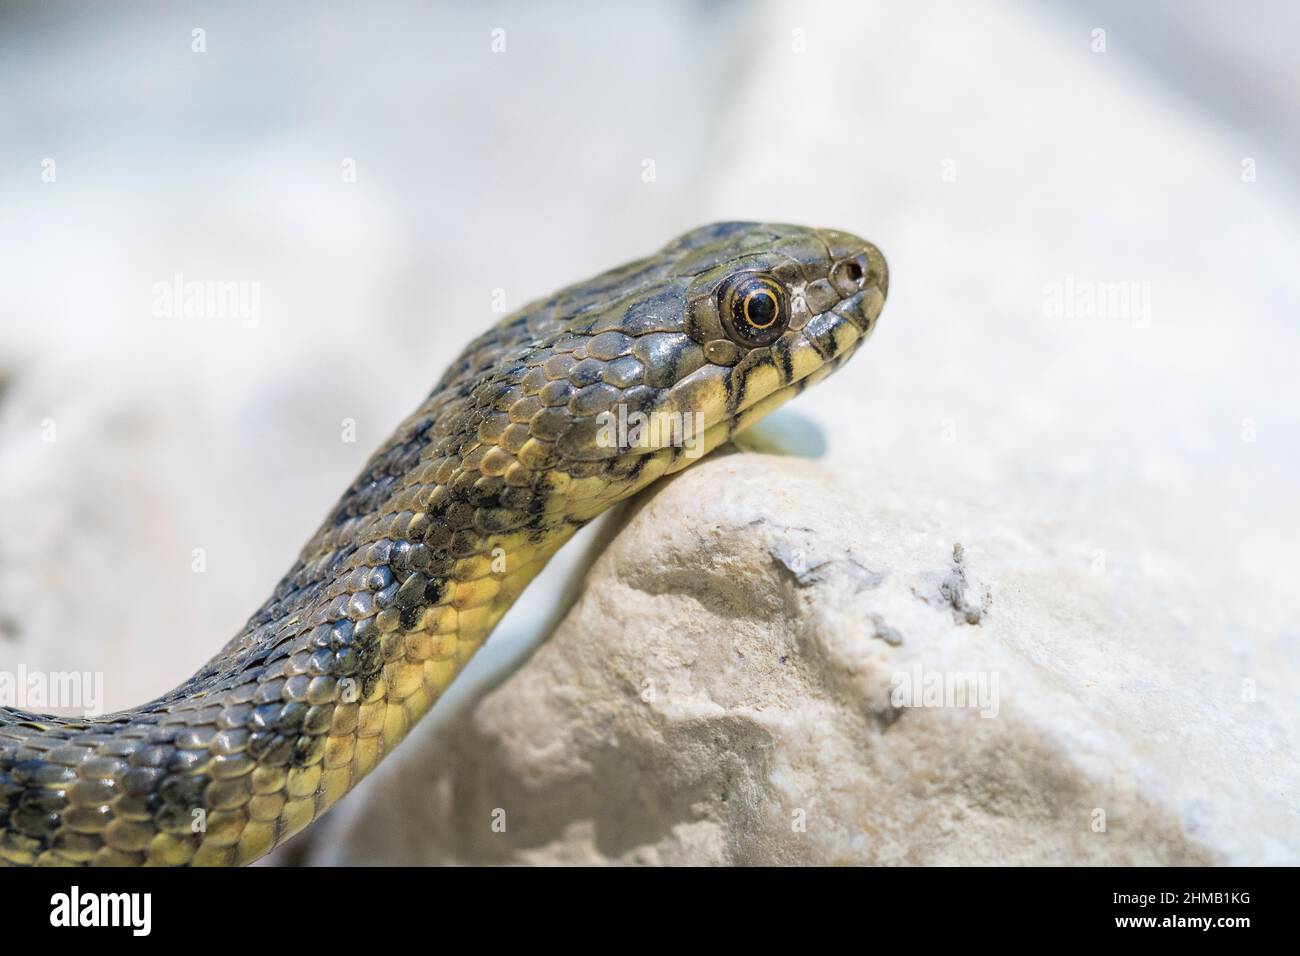 Viperine water snake or viperine snake (Natrix maura). Stock Photo